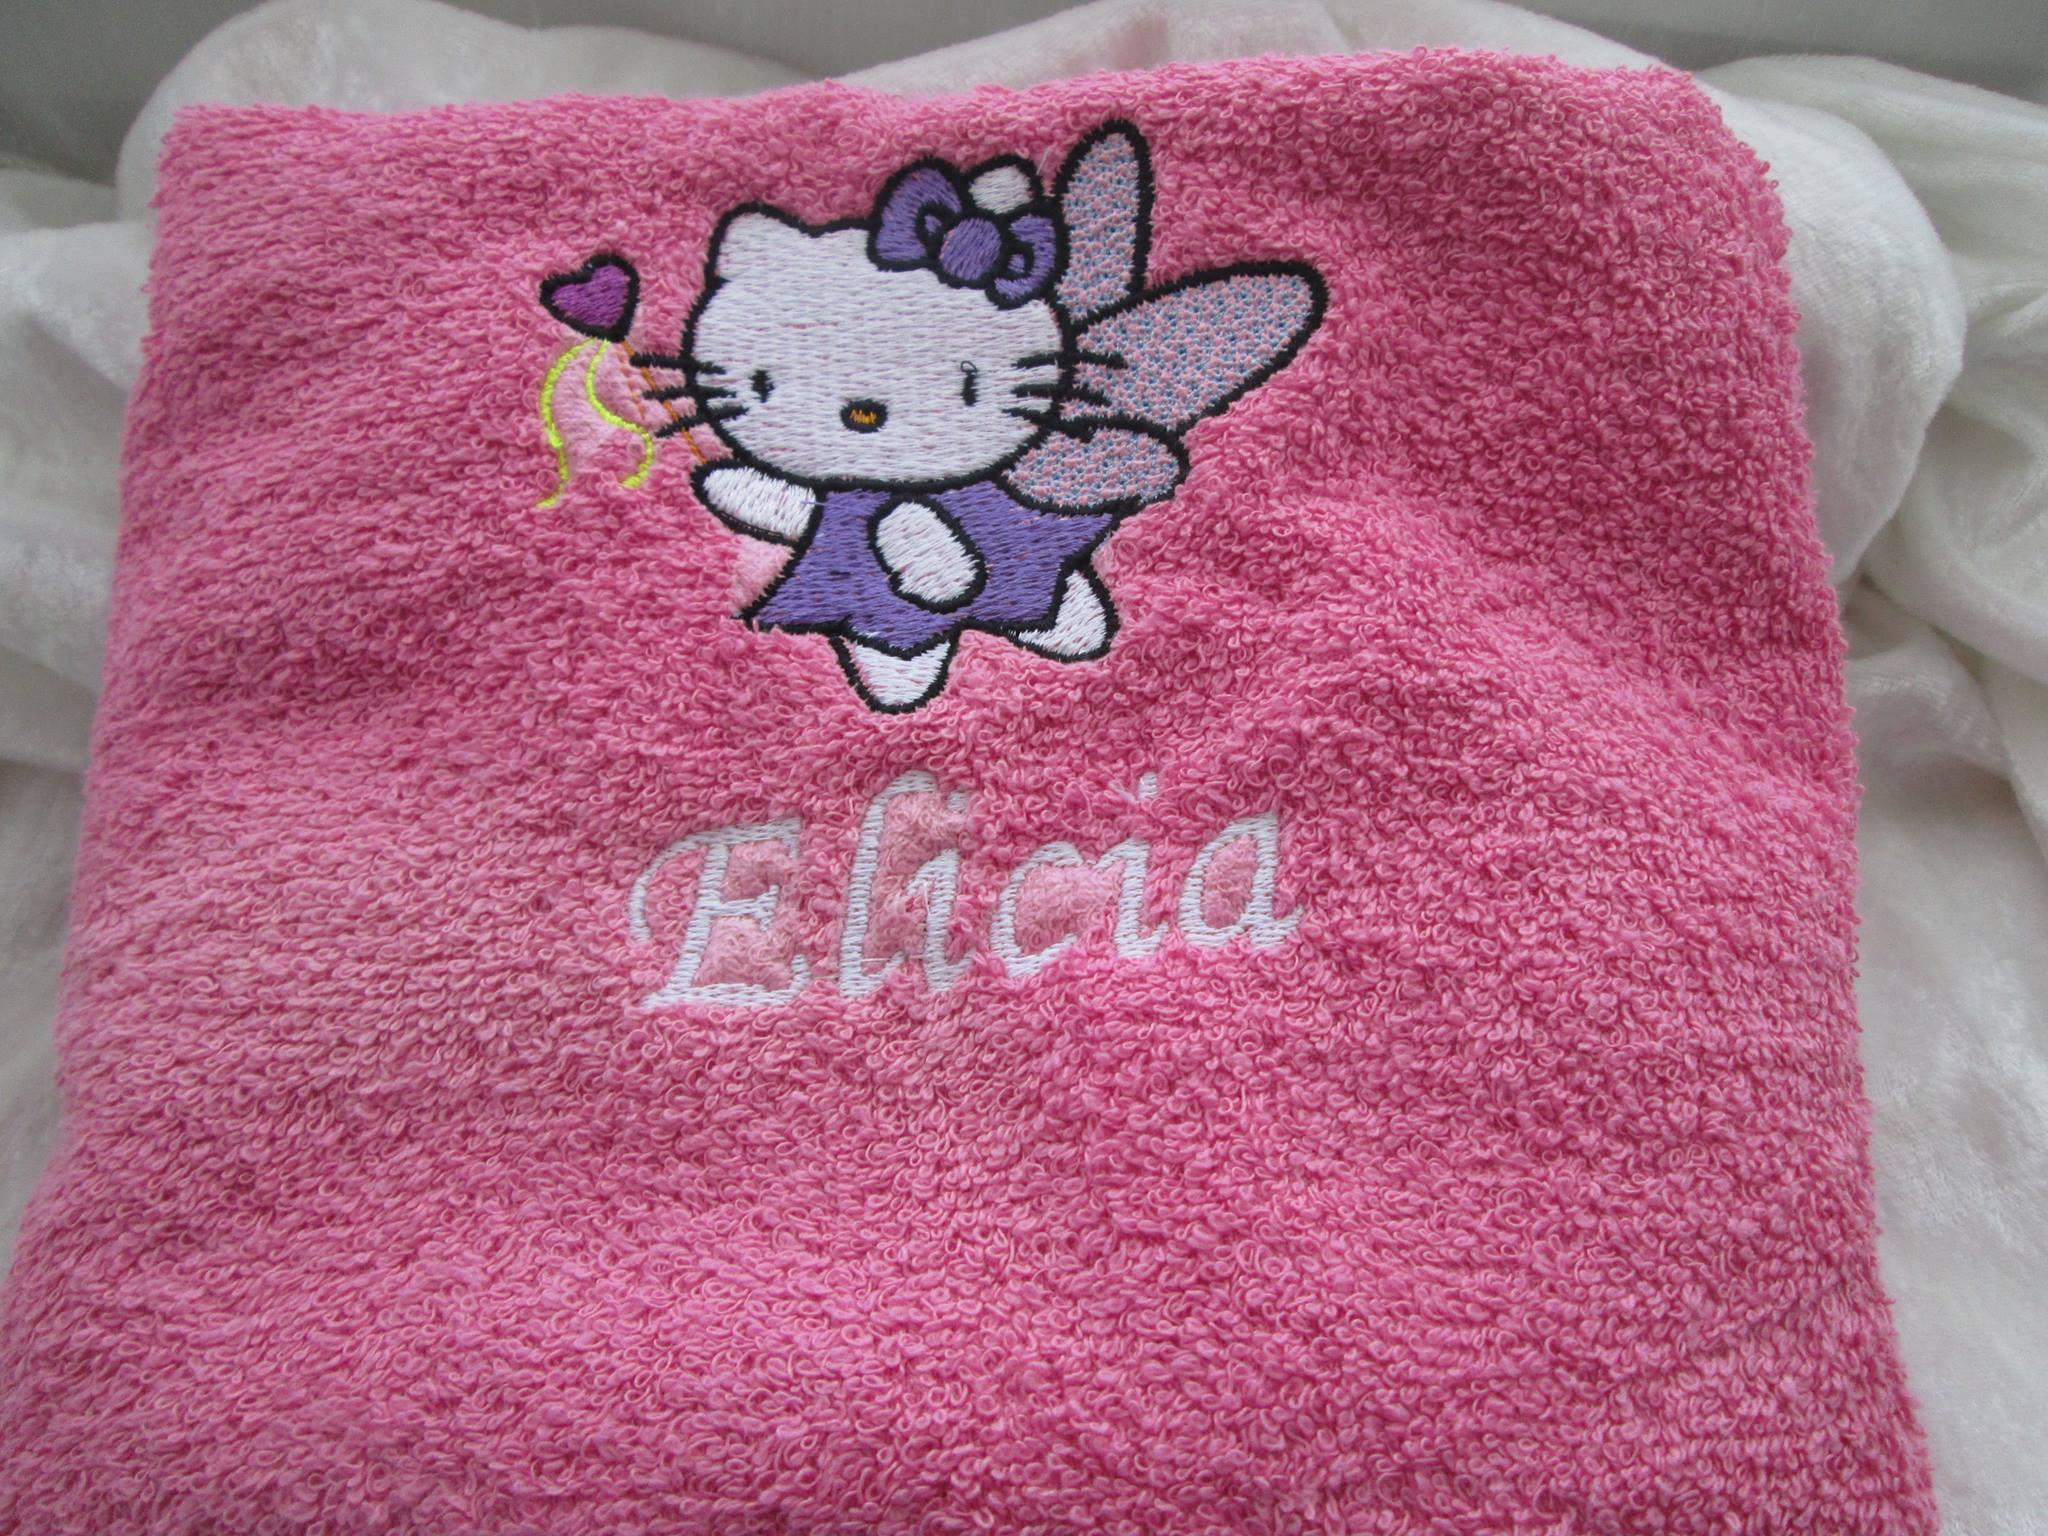 Bath towel with Hello Kitty Fairy embroidery design